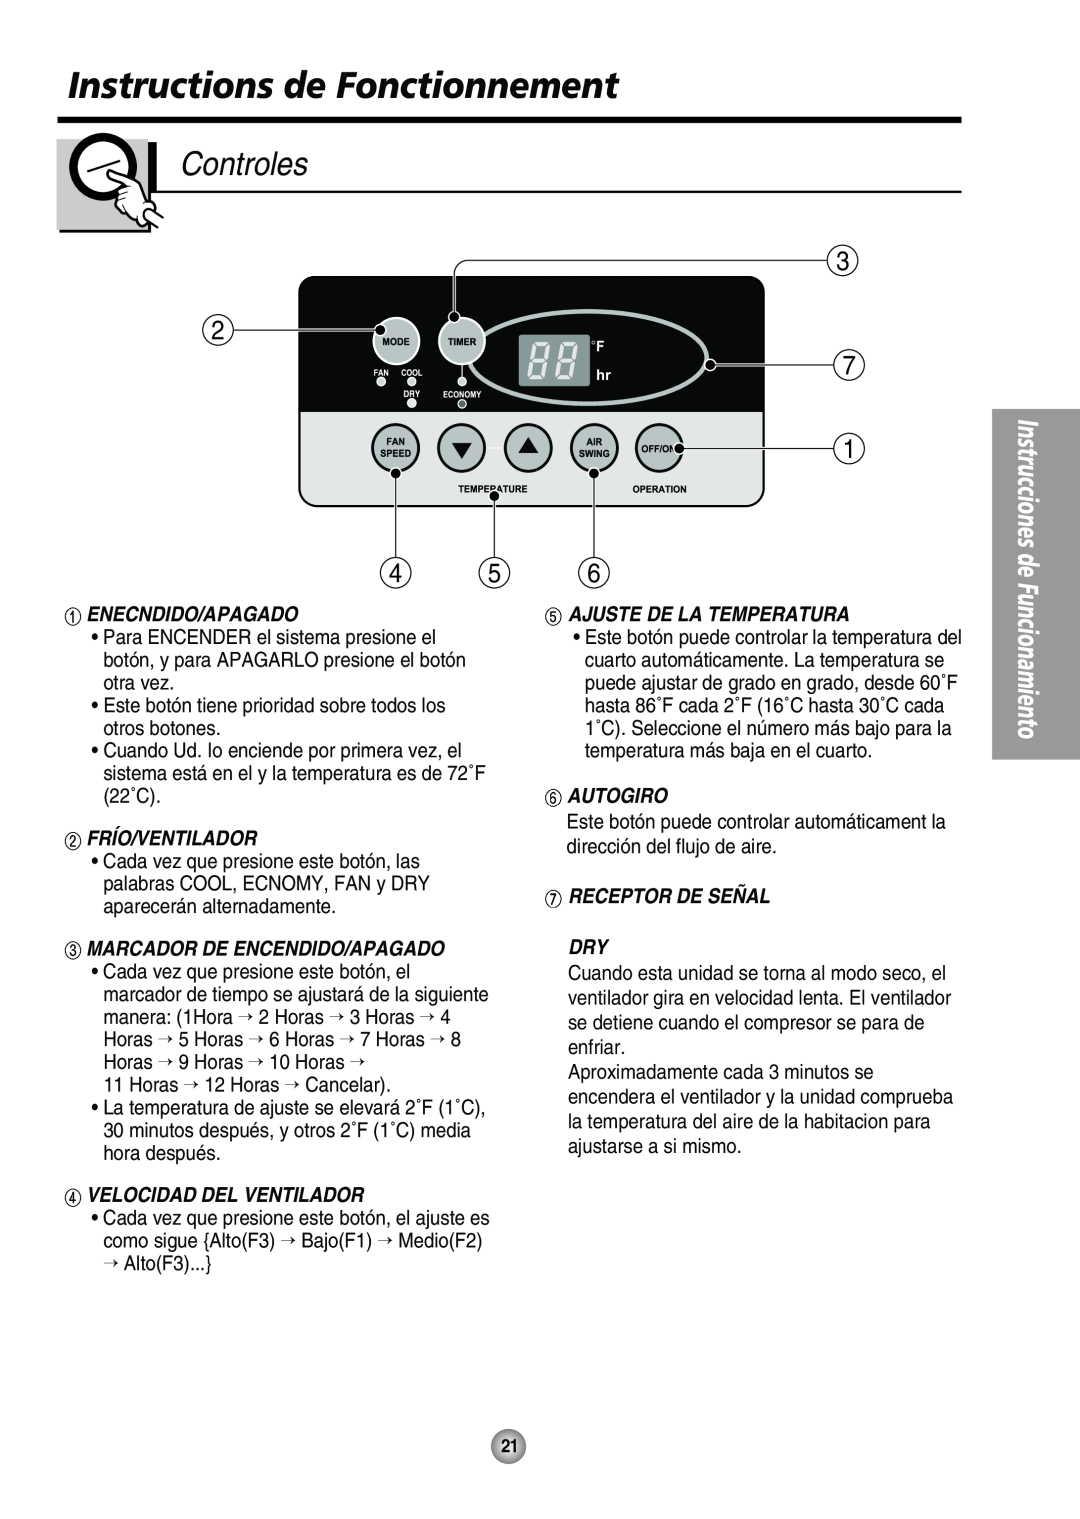 Panasonic CW-XC125HU, CW-XC105HU Instructions de Fonctionnement, Controles, Enecndido/Apagado, Frío/Ventilador, Autogiro 